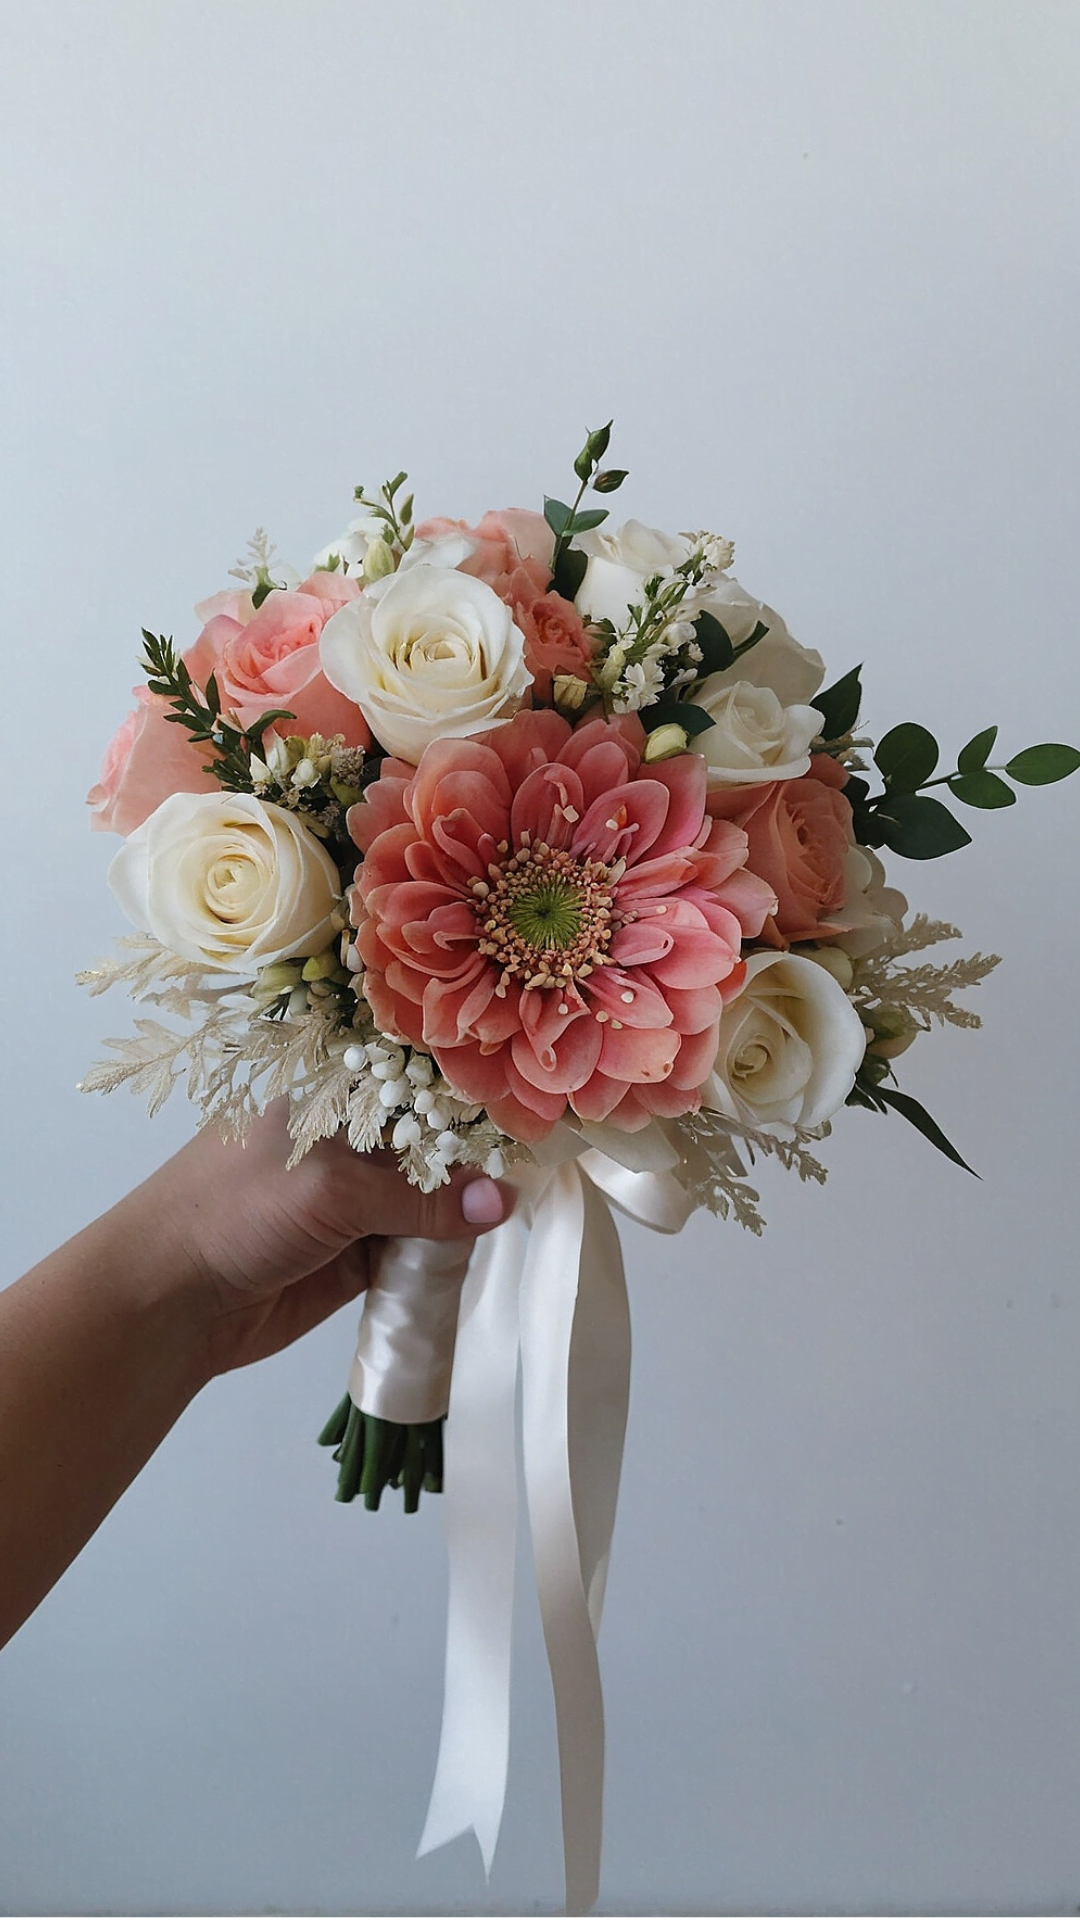 Prom Night Exclusives: Unique Bouquet Ideas